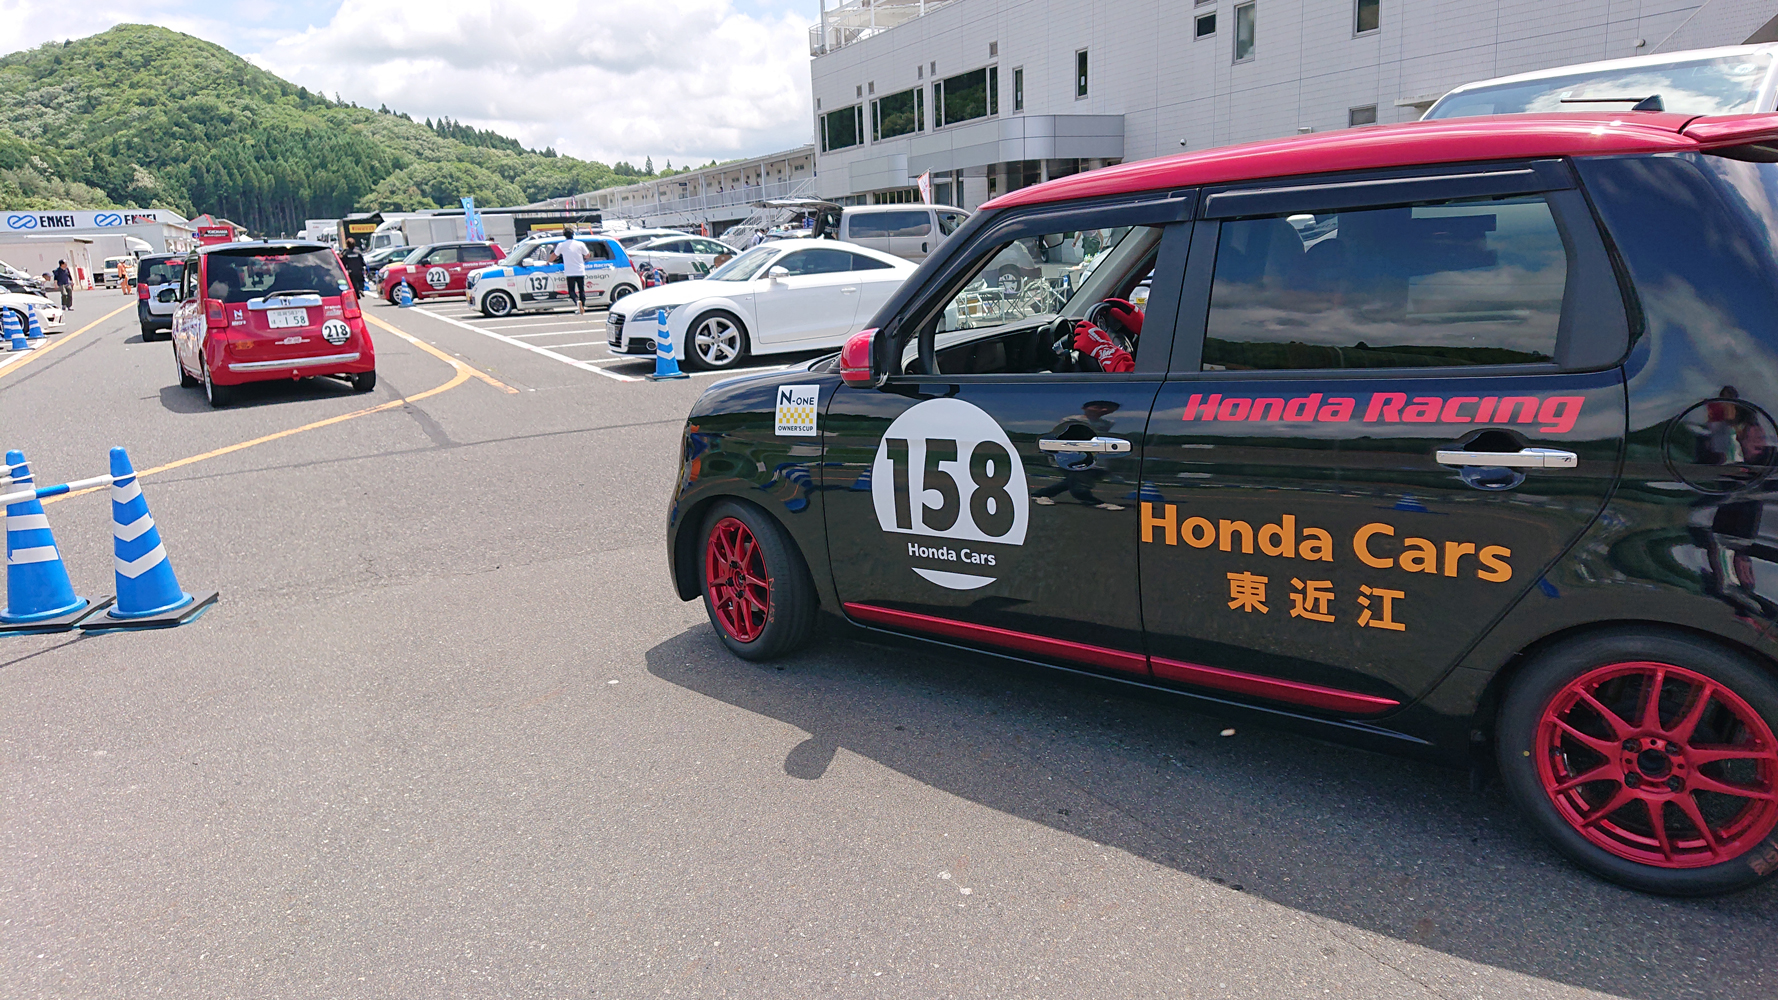 19 N One Owner S Cup Round 5 Honda Cars 東近江 Web Site